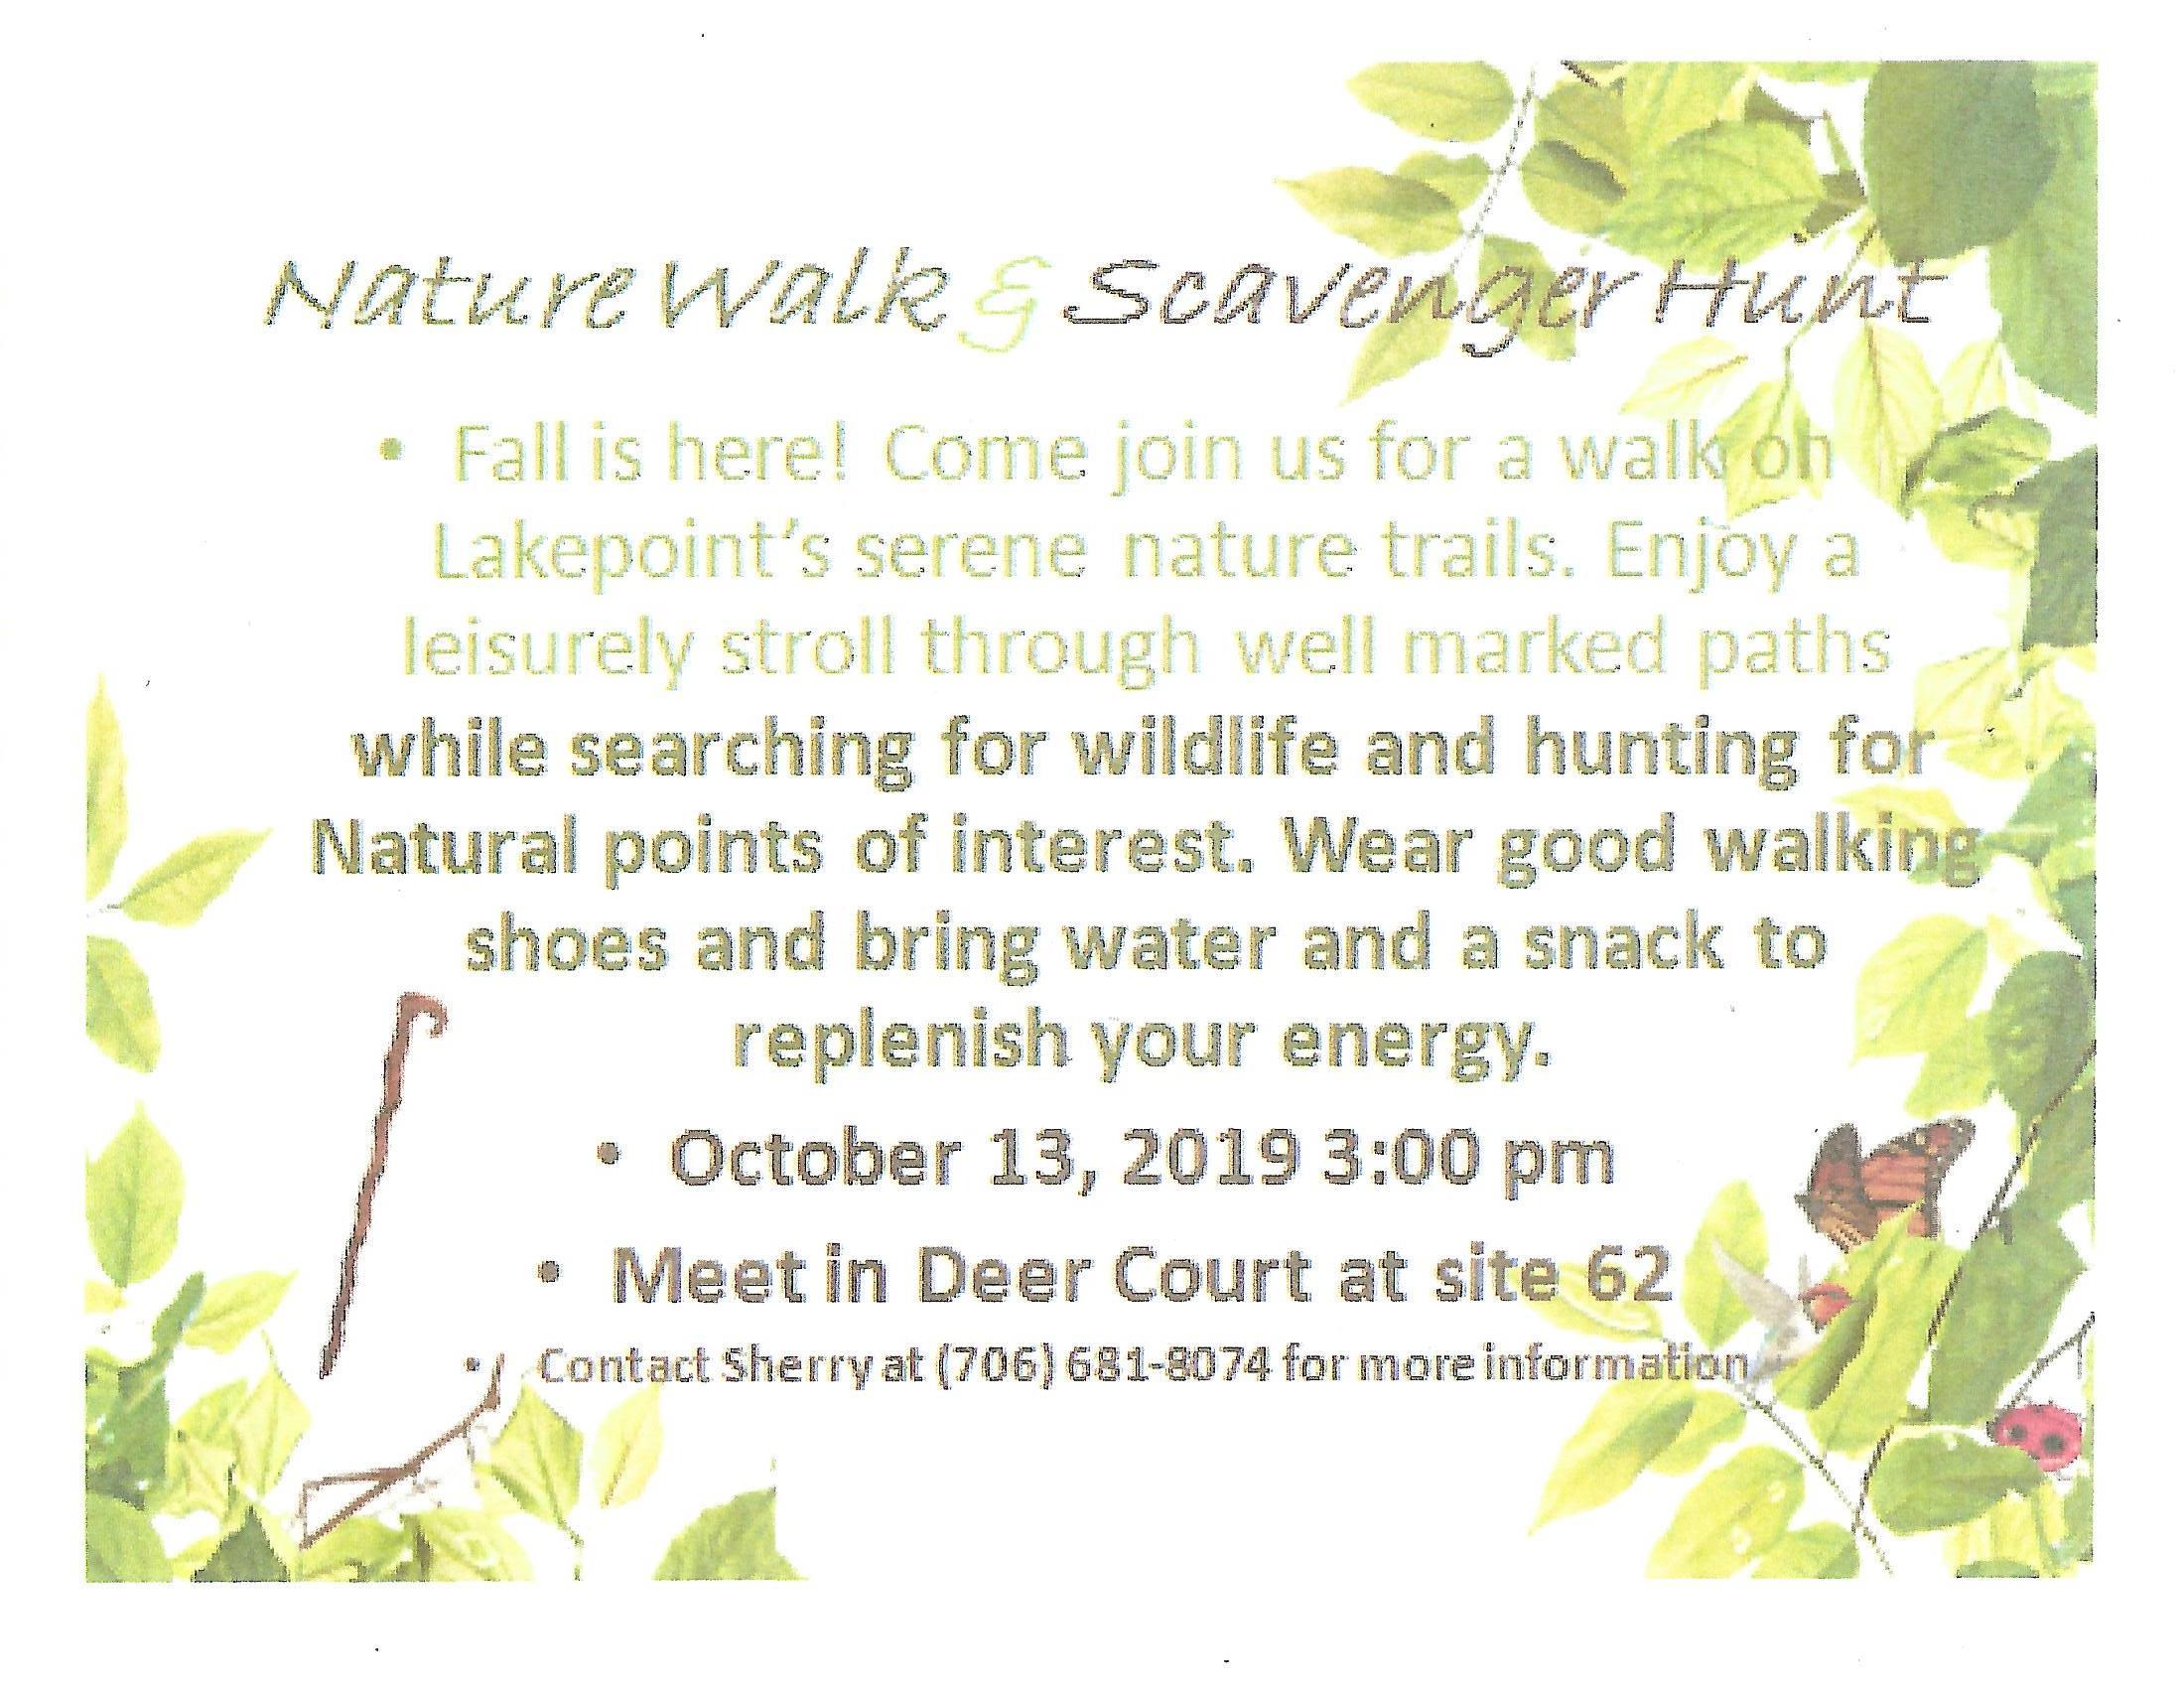 Lakepoint Nature Walk & Scavenger Hunt